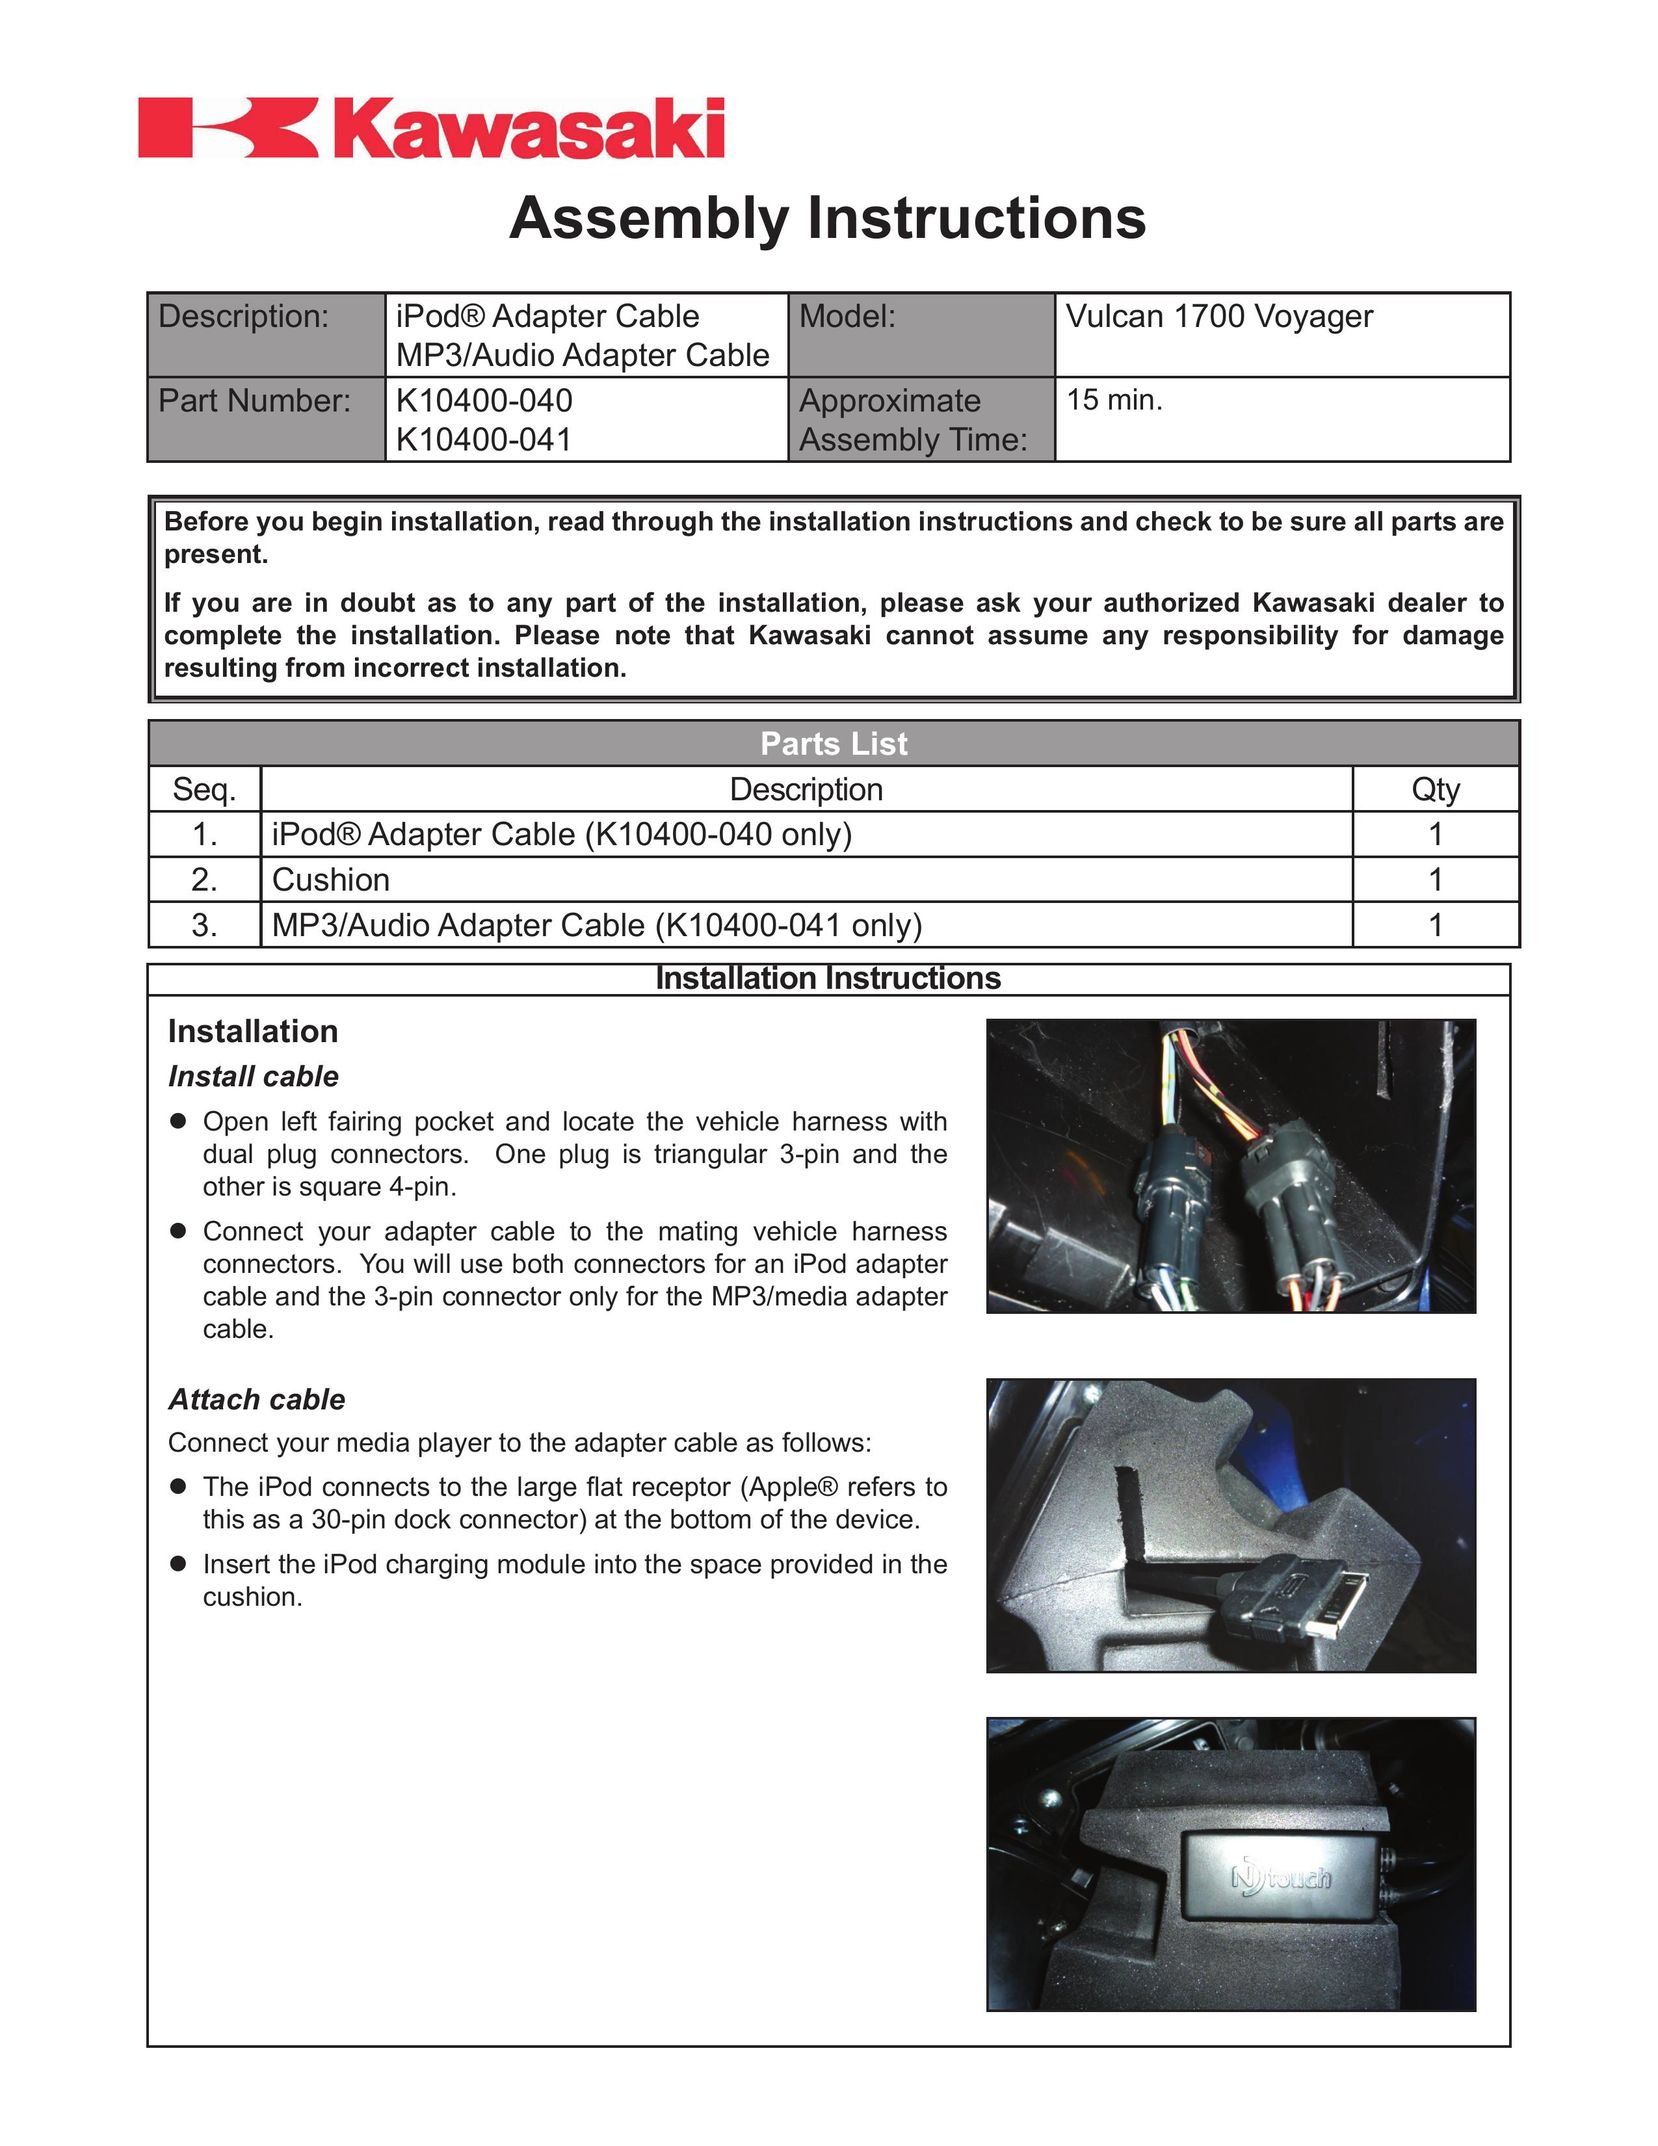 Kawasaki K10400-040 Car Stereo System User Manual